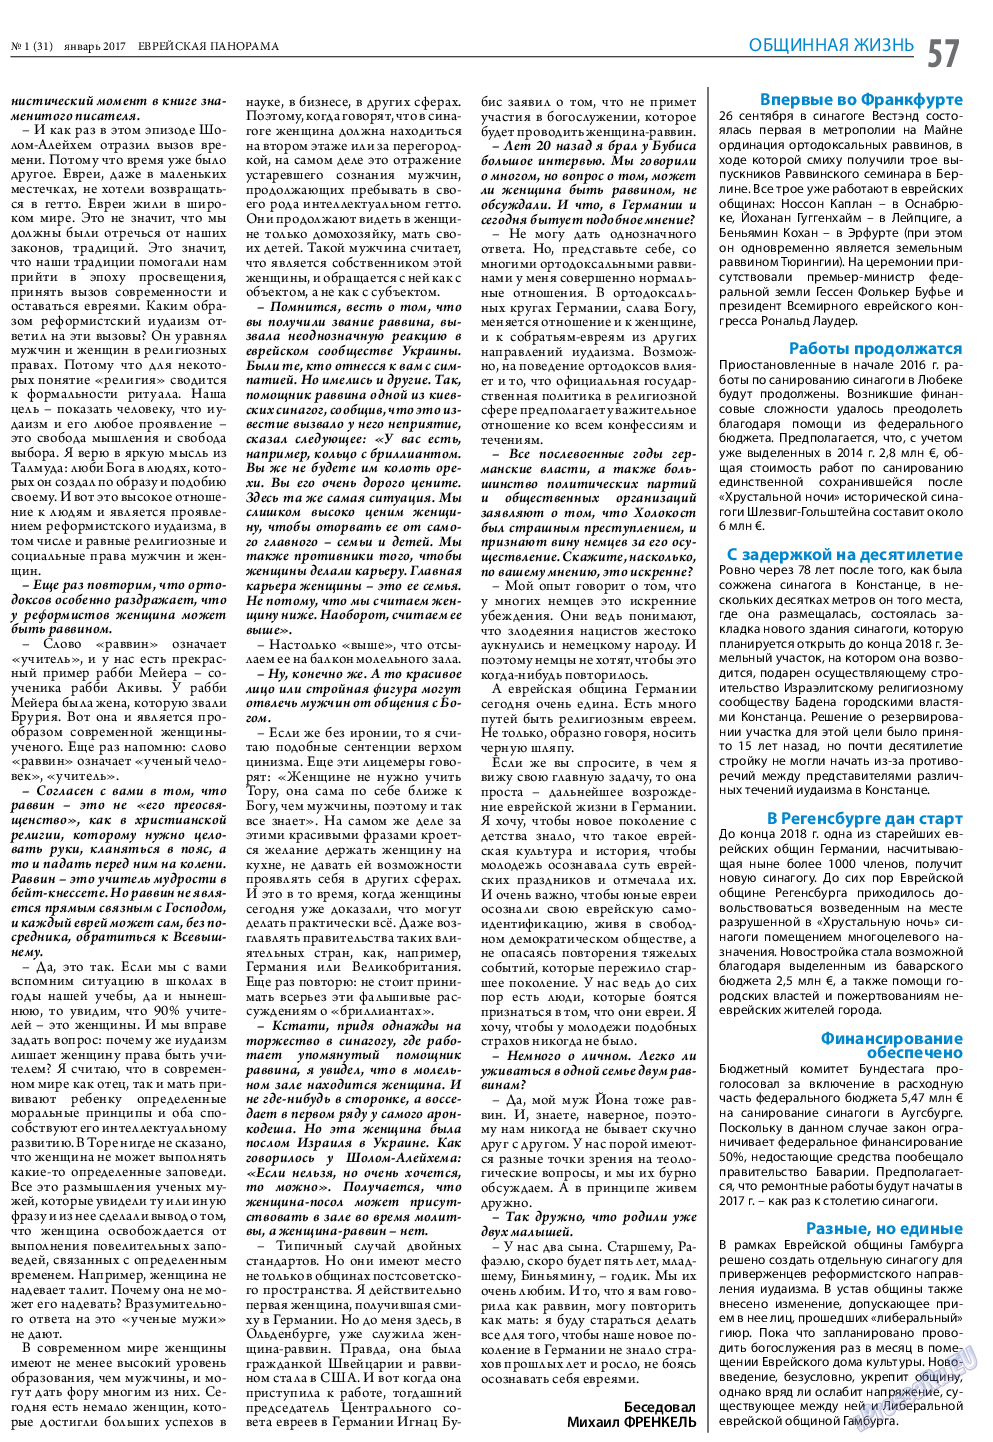 Еврейская панорама, газета. 2017 №1 стр.57